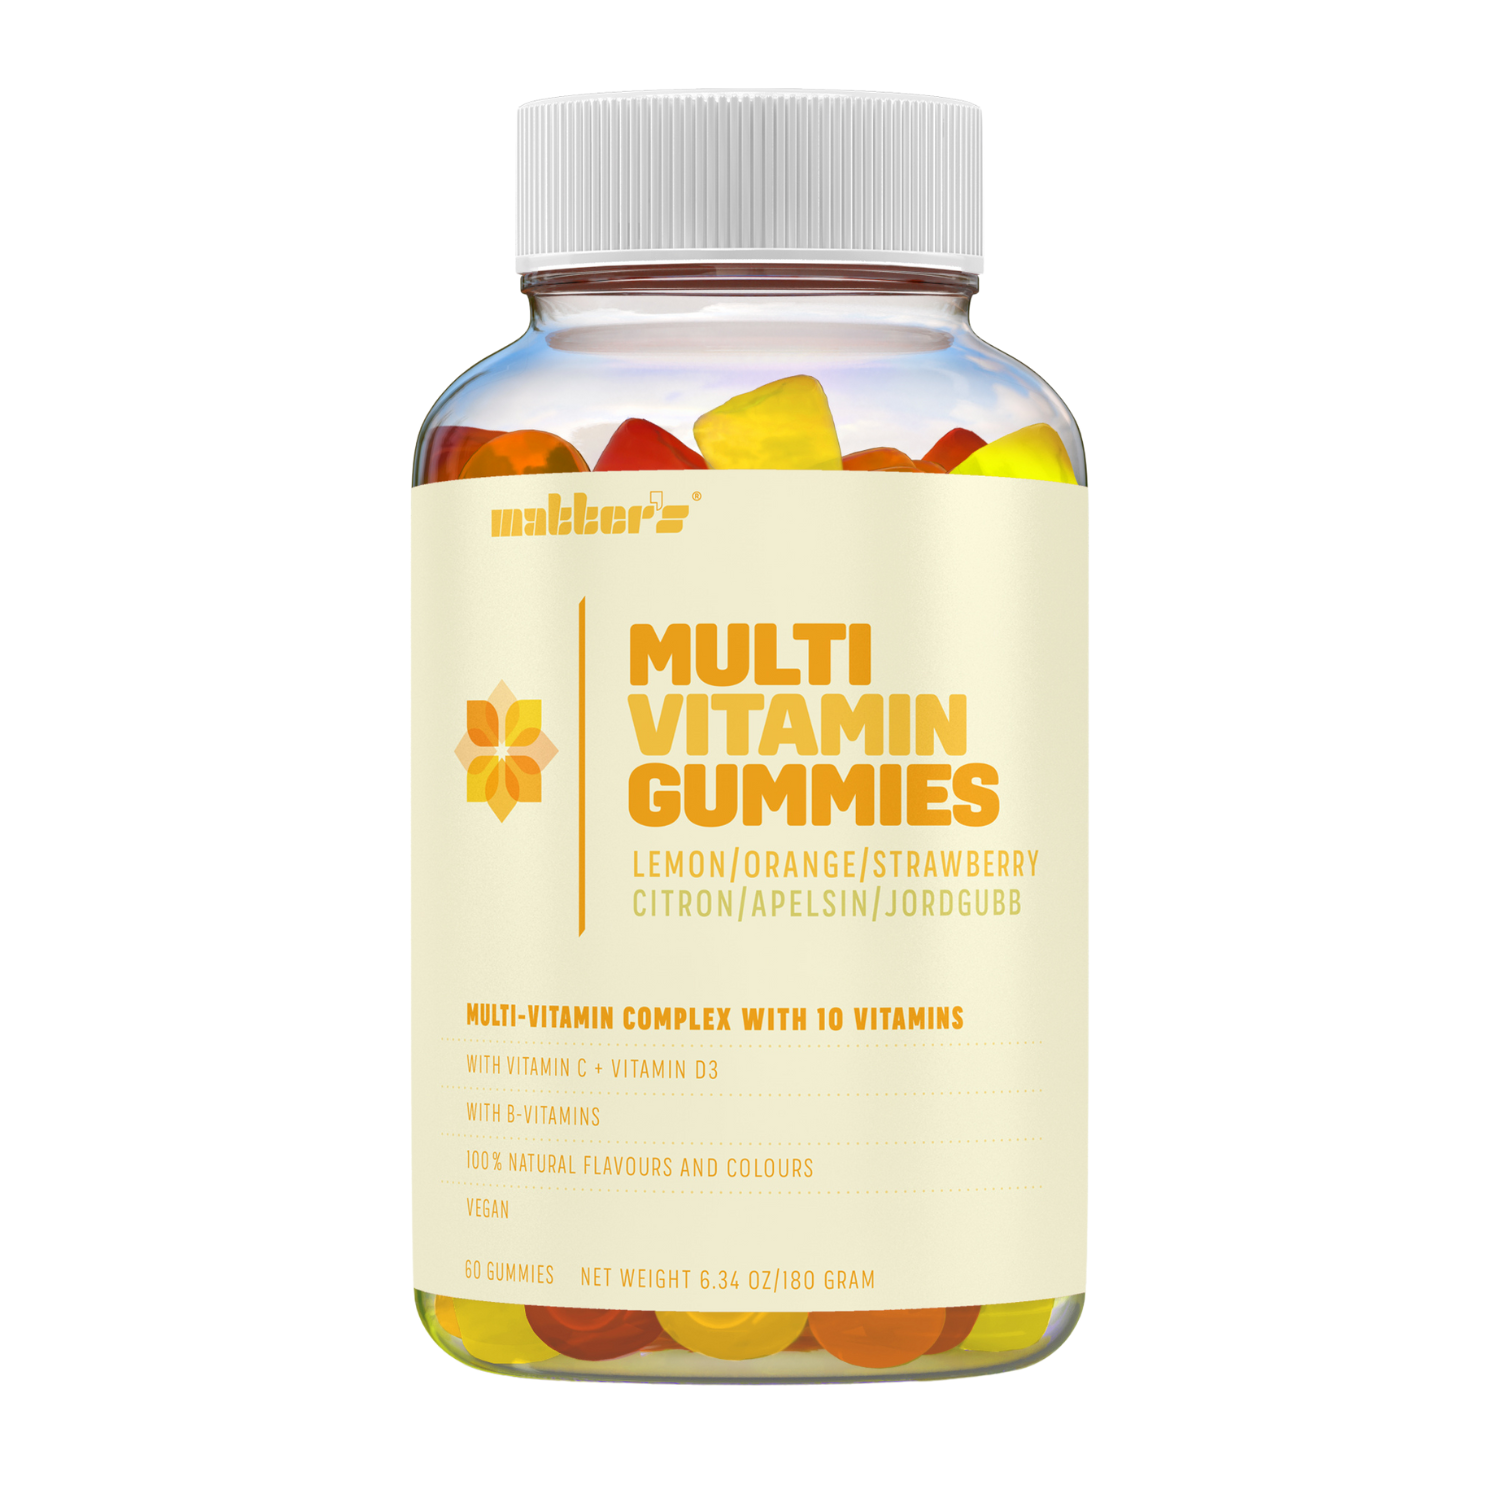 Matters Multi-Vitamin Gummies Vit D3 + Vitamin C+E & B12 60 Gummies Citron/Apelsin/Jordgubb